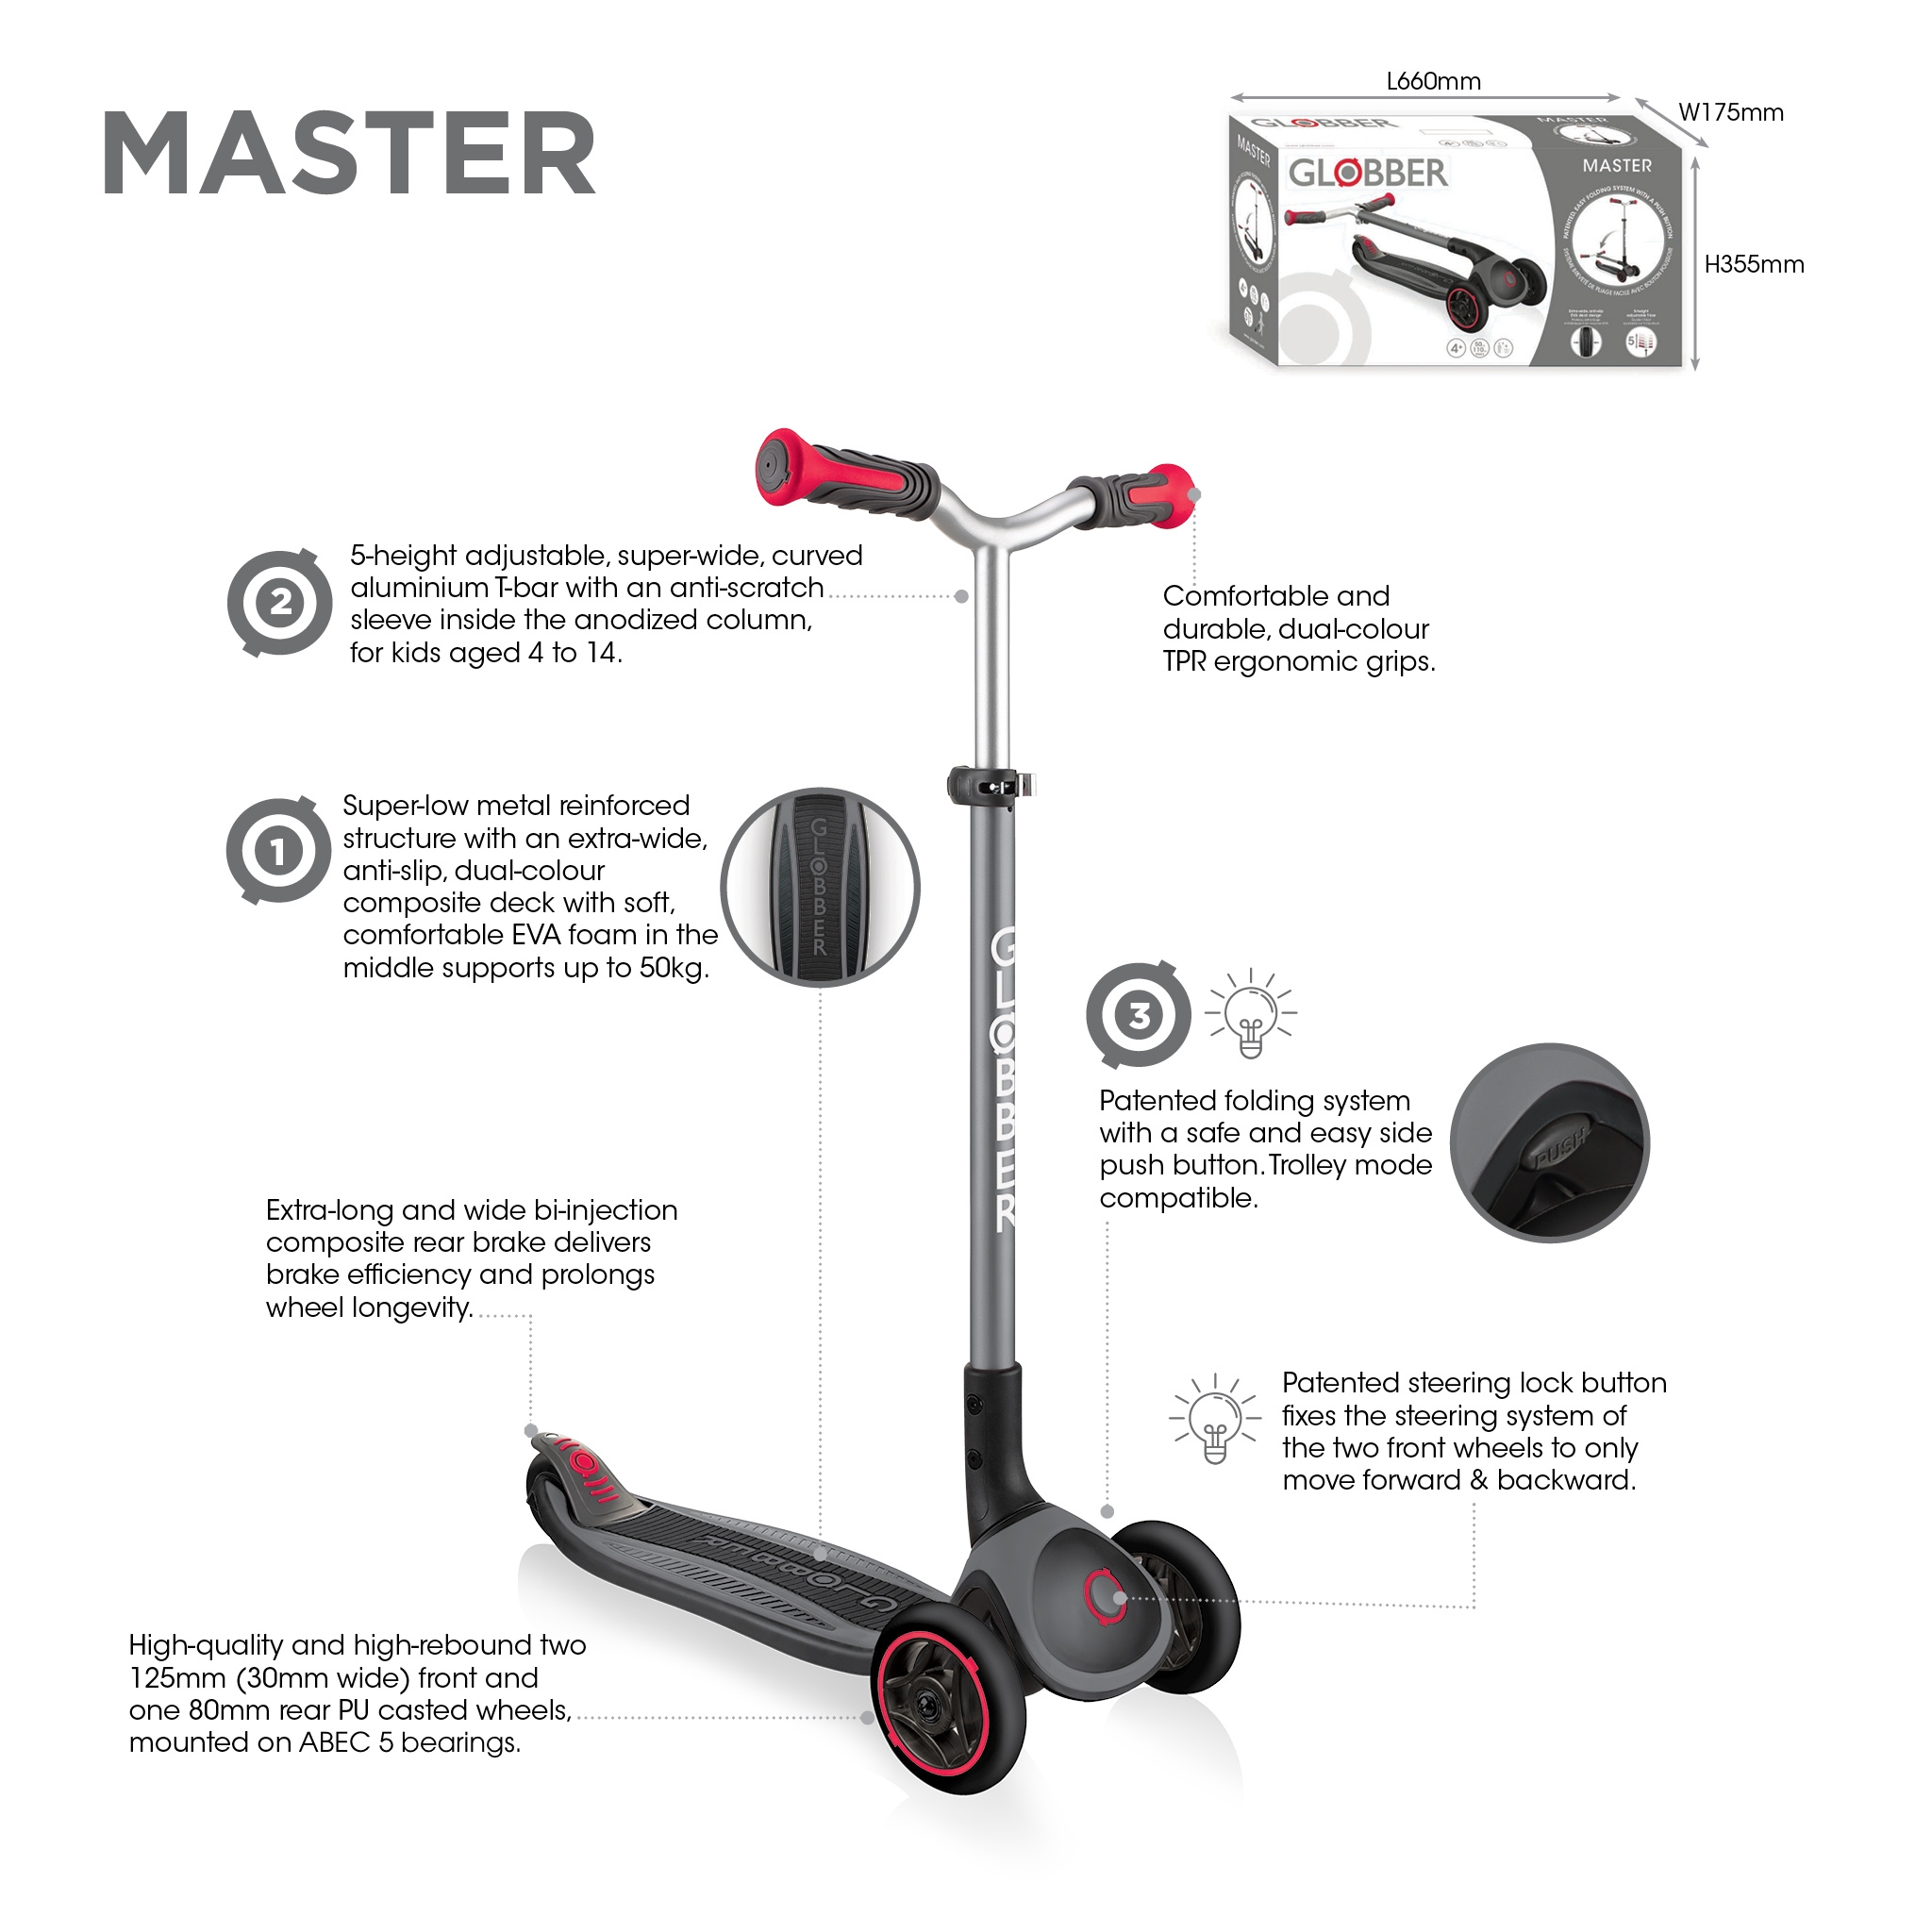 Globber-MASTER-premium-3-wheel-adjustable-scooter-for-kids-aged-4-to-14 2